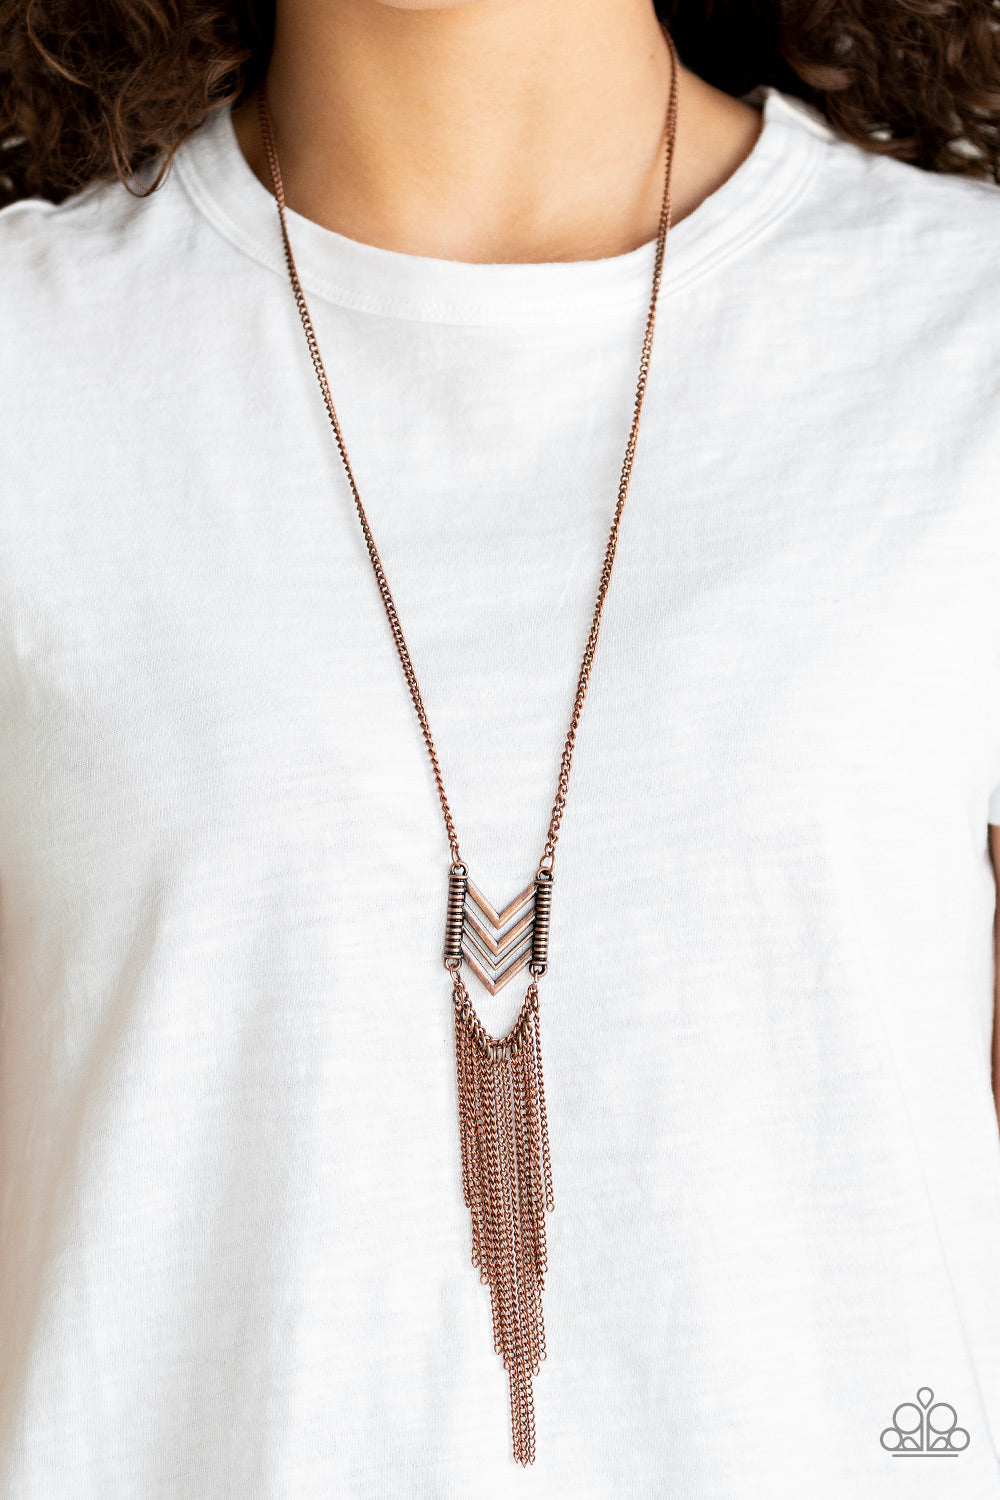 Point Taken - Copper necklace